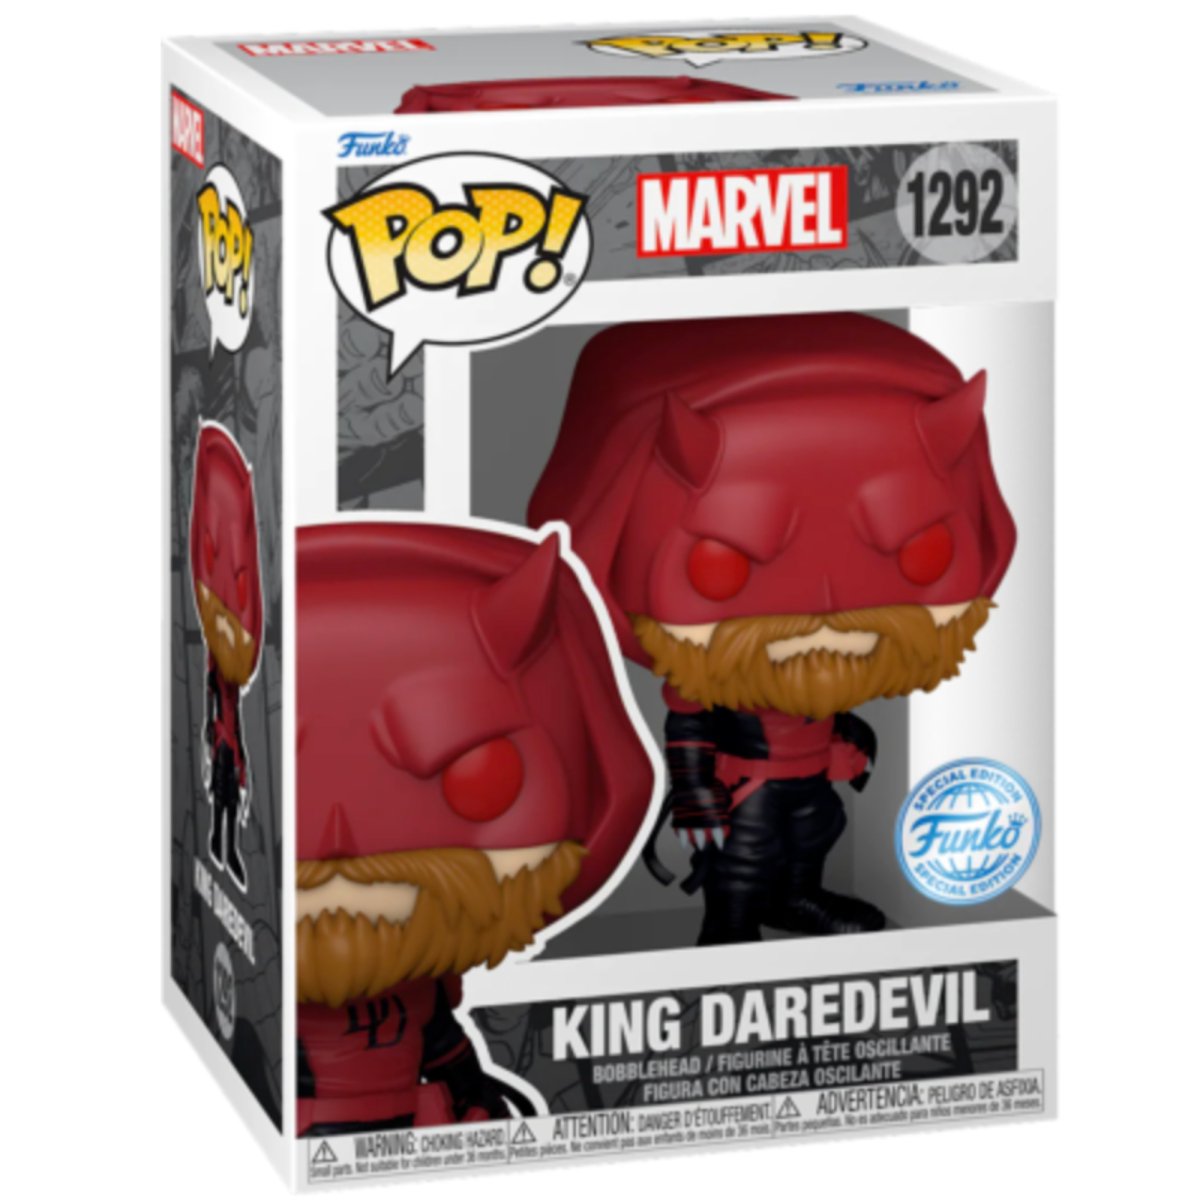 Marvel - King Daredevil (Special Edition) #1292 - Funko Pop! Vinyl Marvel - Persona Toys